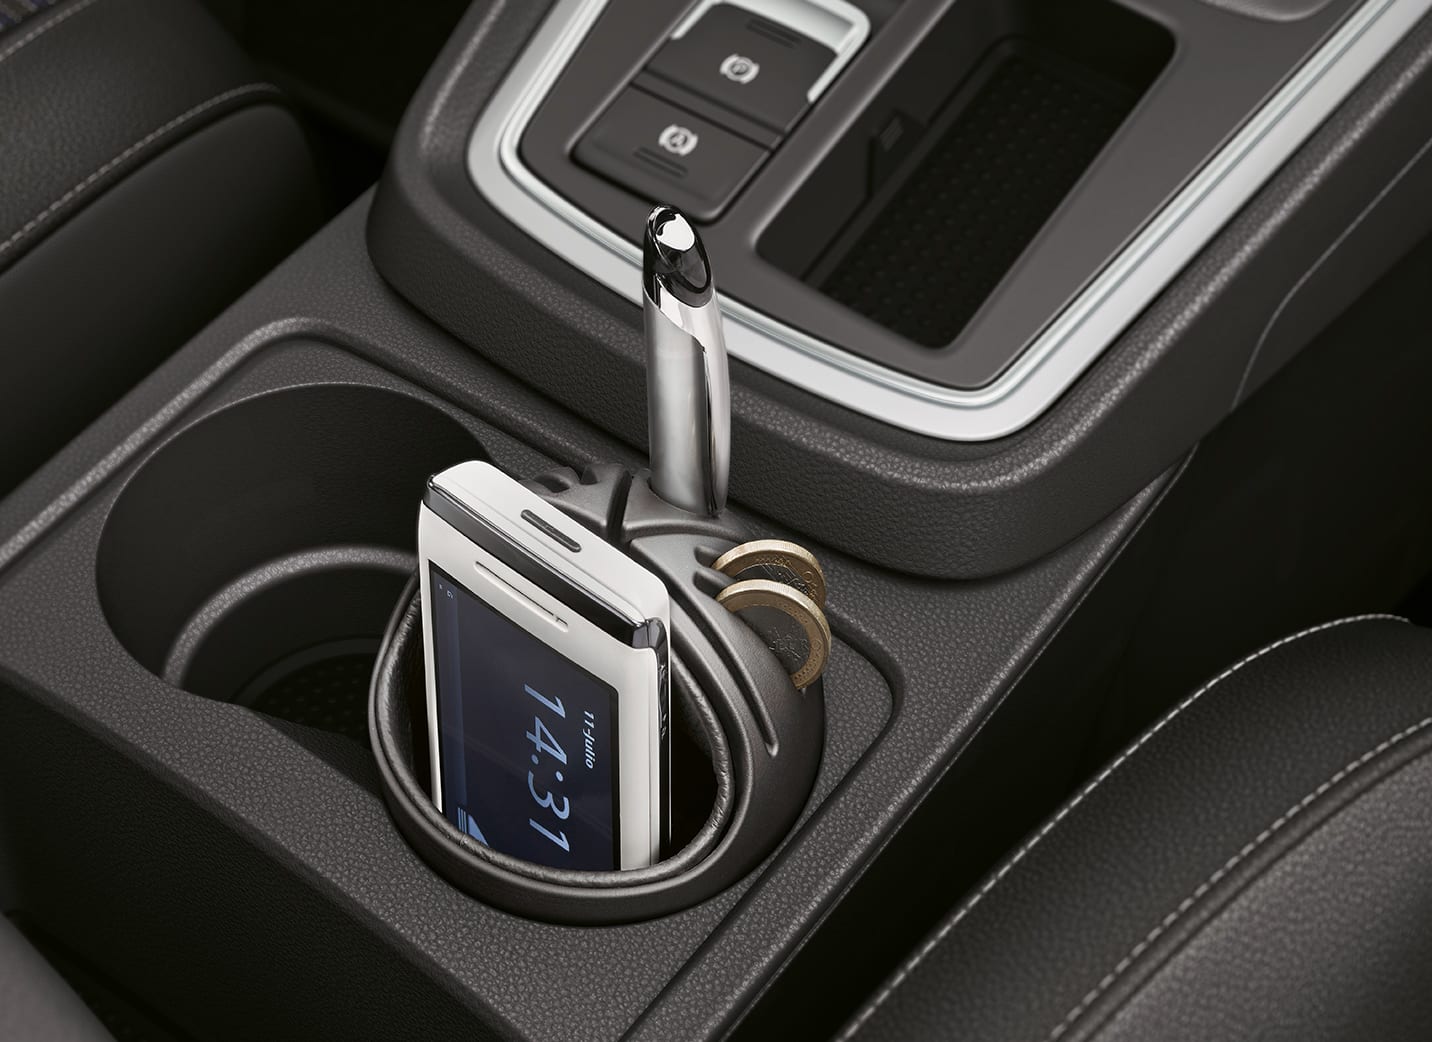 SEAT Leon Sportstourer estate family car hatchback smart and practical accessories – SEAT Leon Sportourer  Accessories